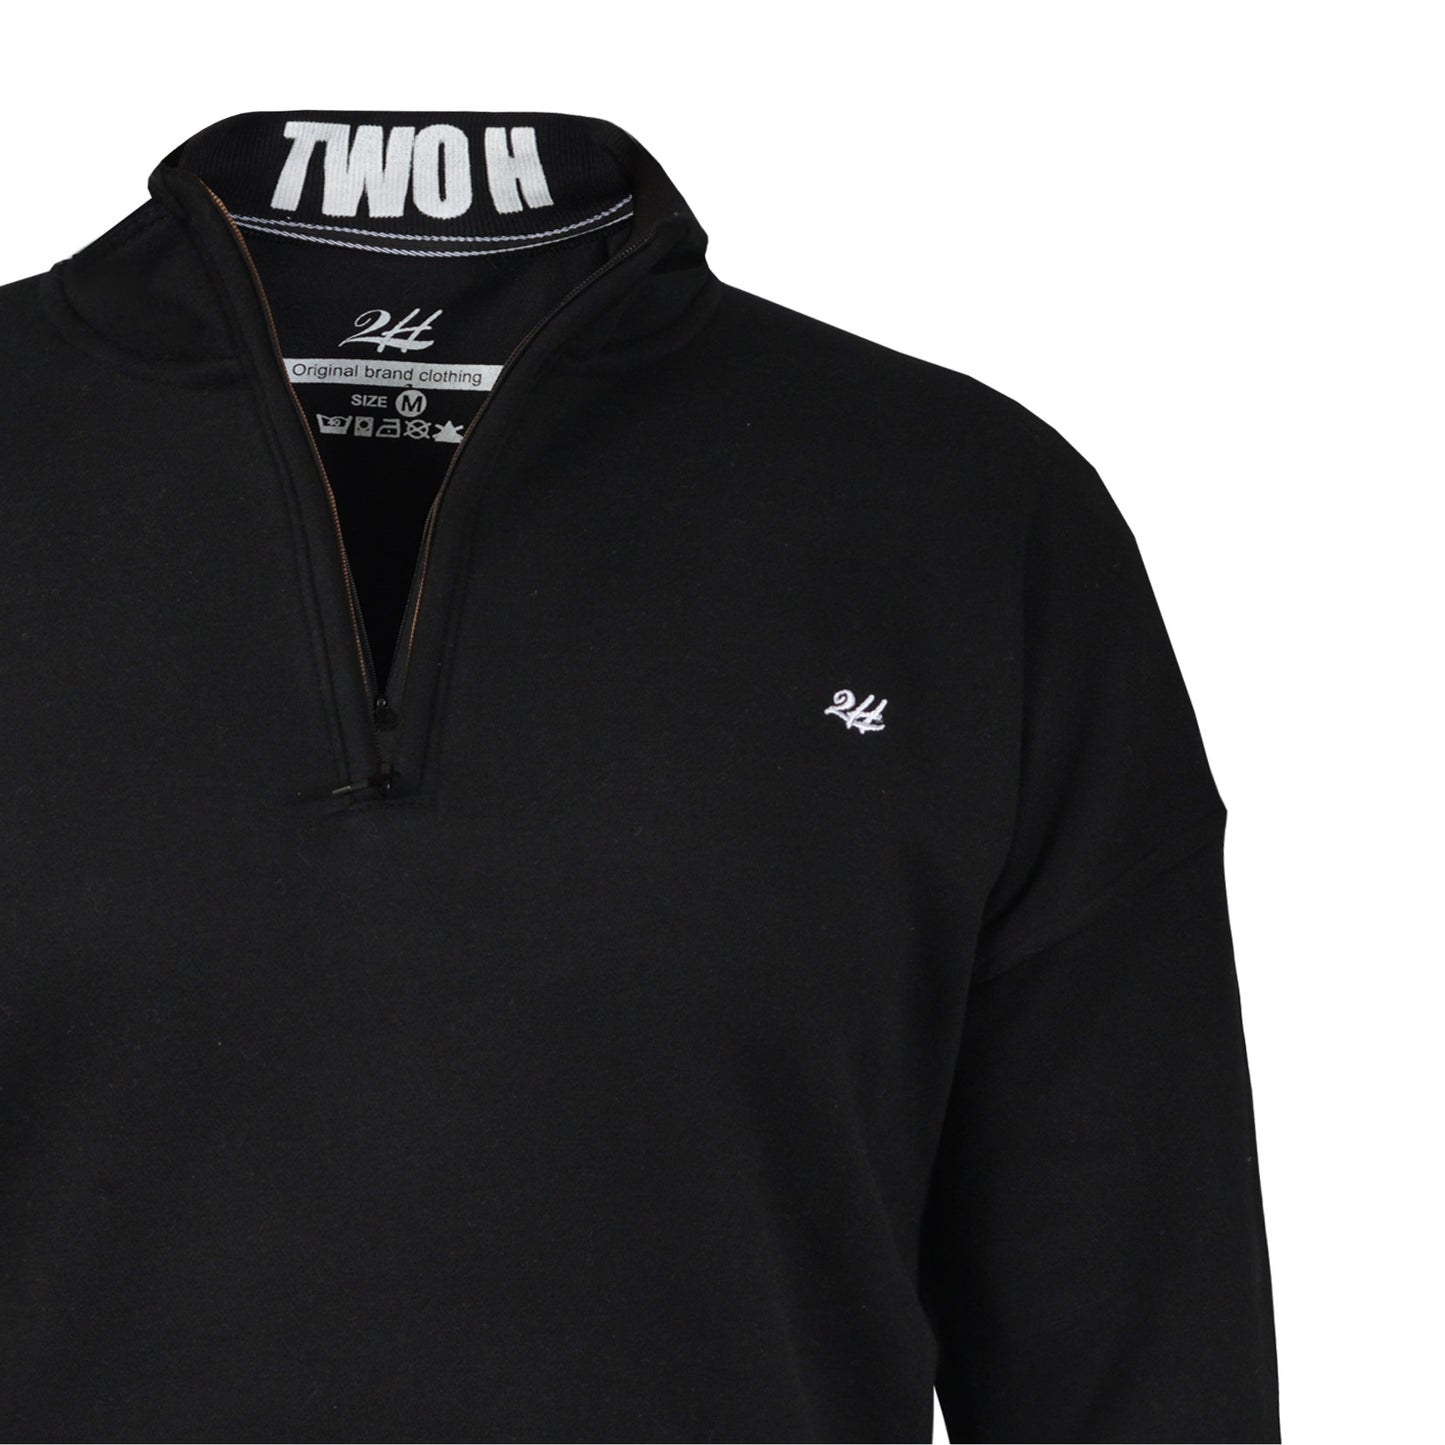 2H #6122 Black Half Zipper Sweater With High Neck